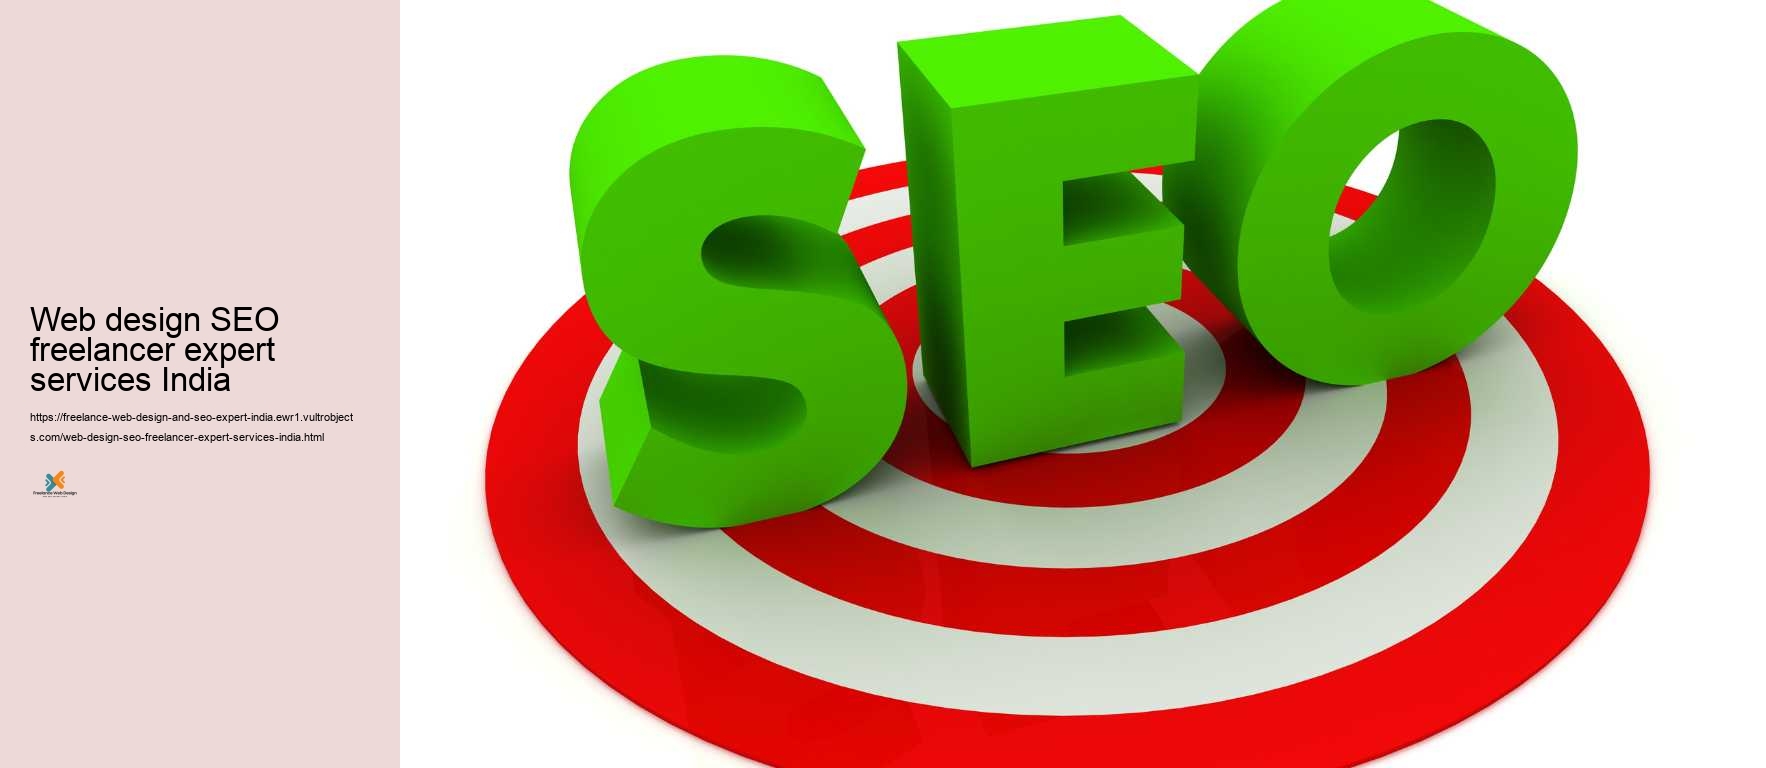 Web design SEO freelancer expert services India